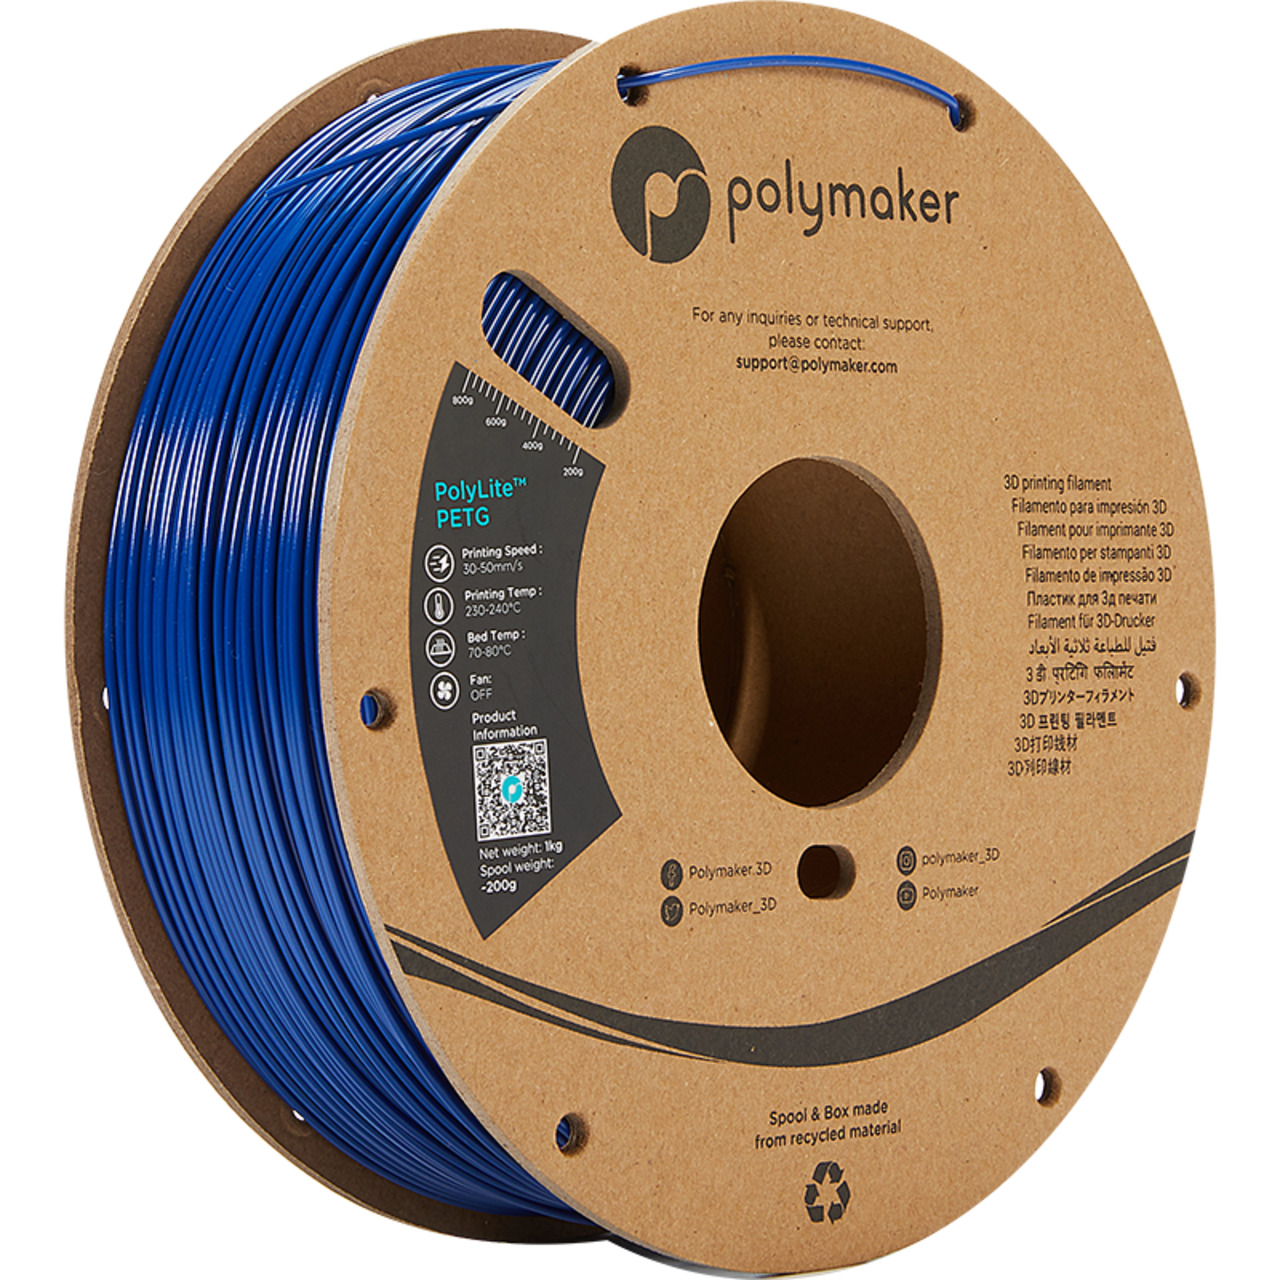 Polymaker PETG-Filament PolyLite- 1-75 mm- blau unter PC-Hardware